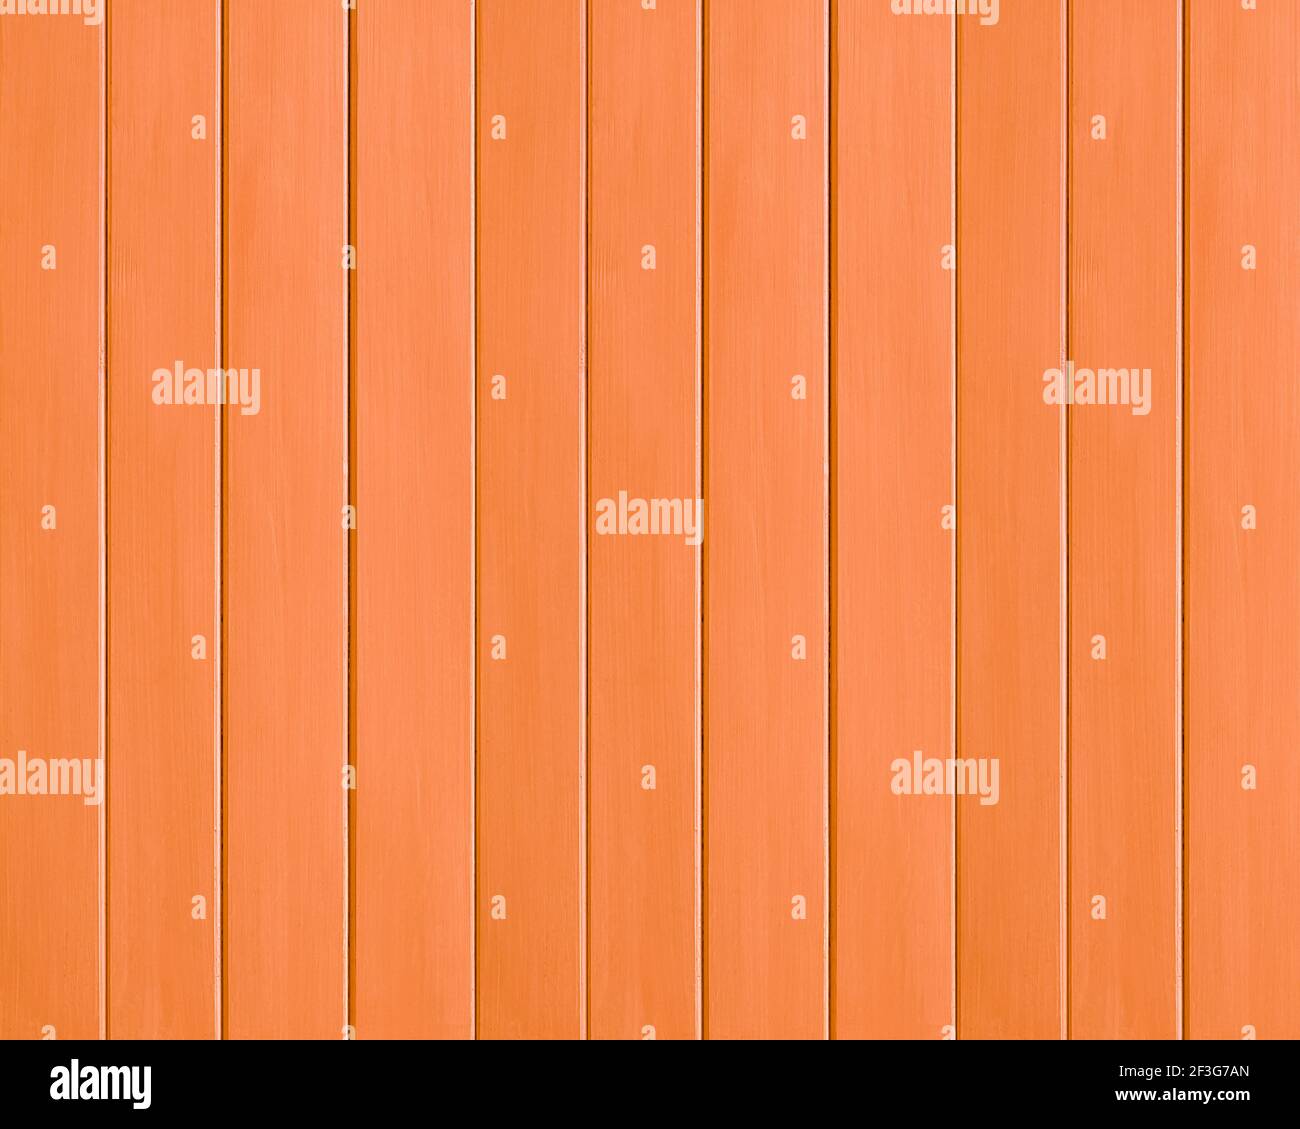 Orange colored wood  plank texture background Stock Photo